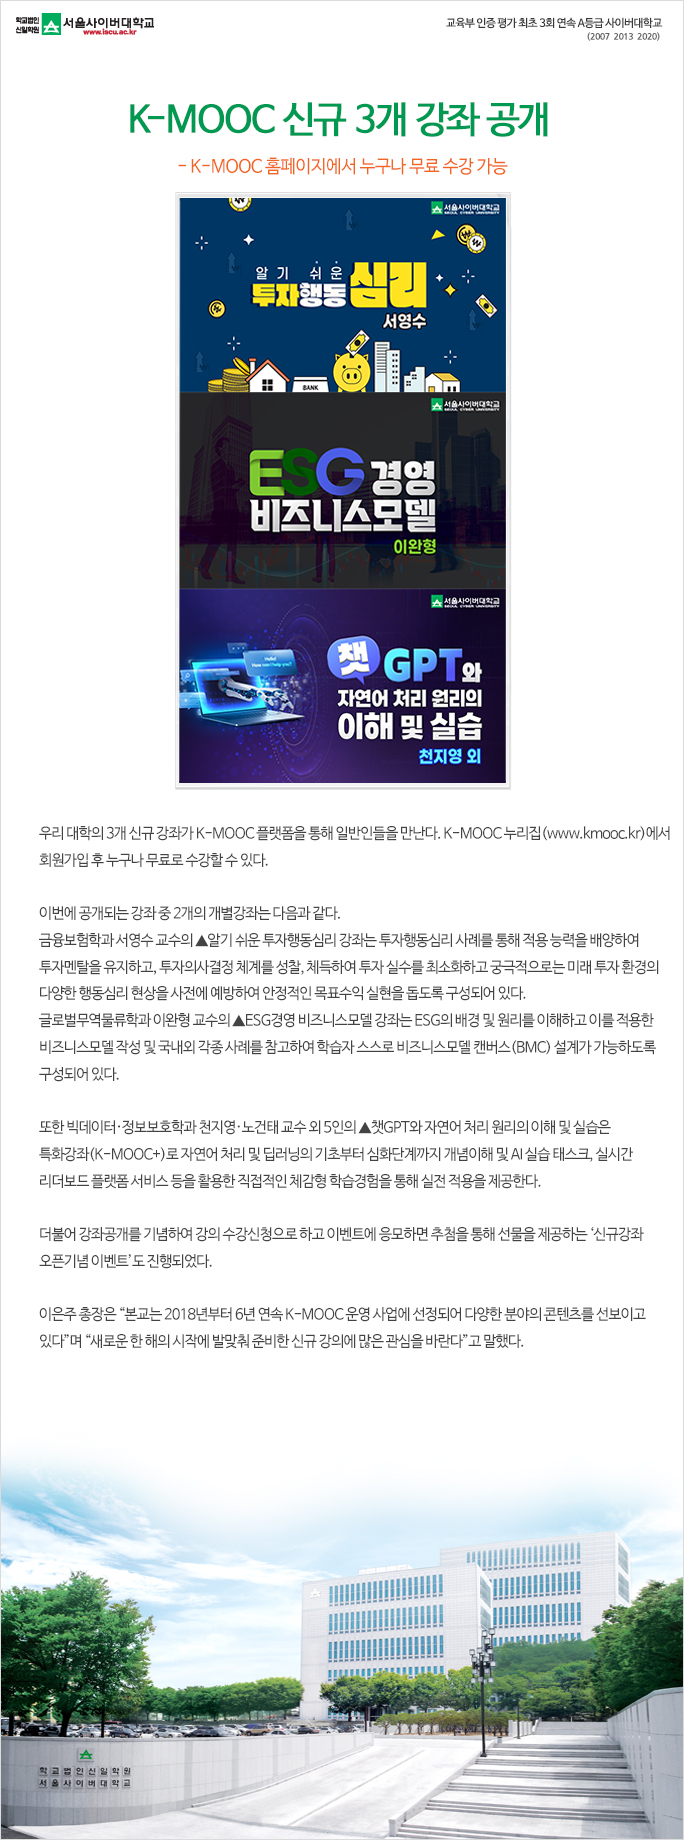 K-MOOC 신규 3개 강좌 공개. 새창으로 열기